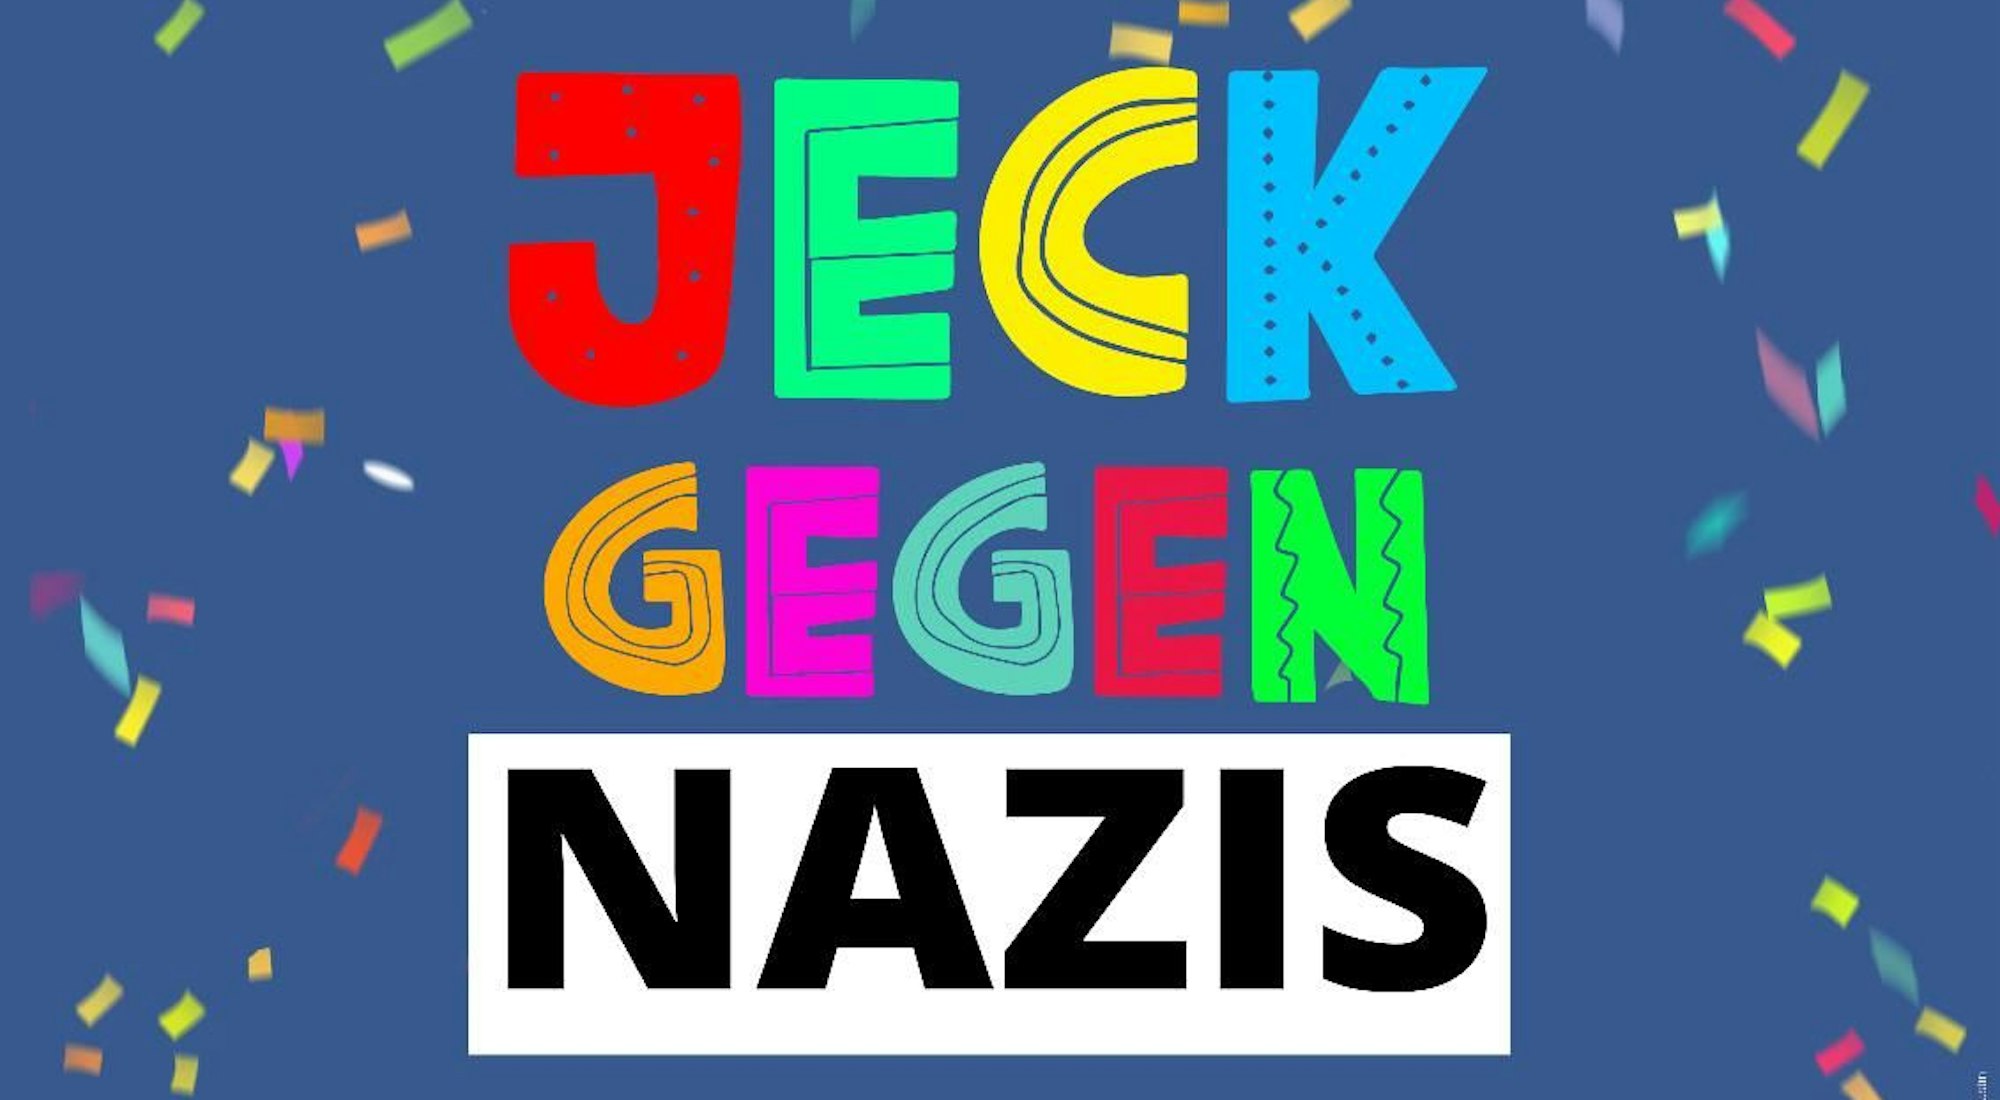 Jeck gegen Nazis